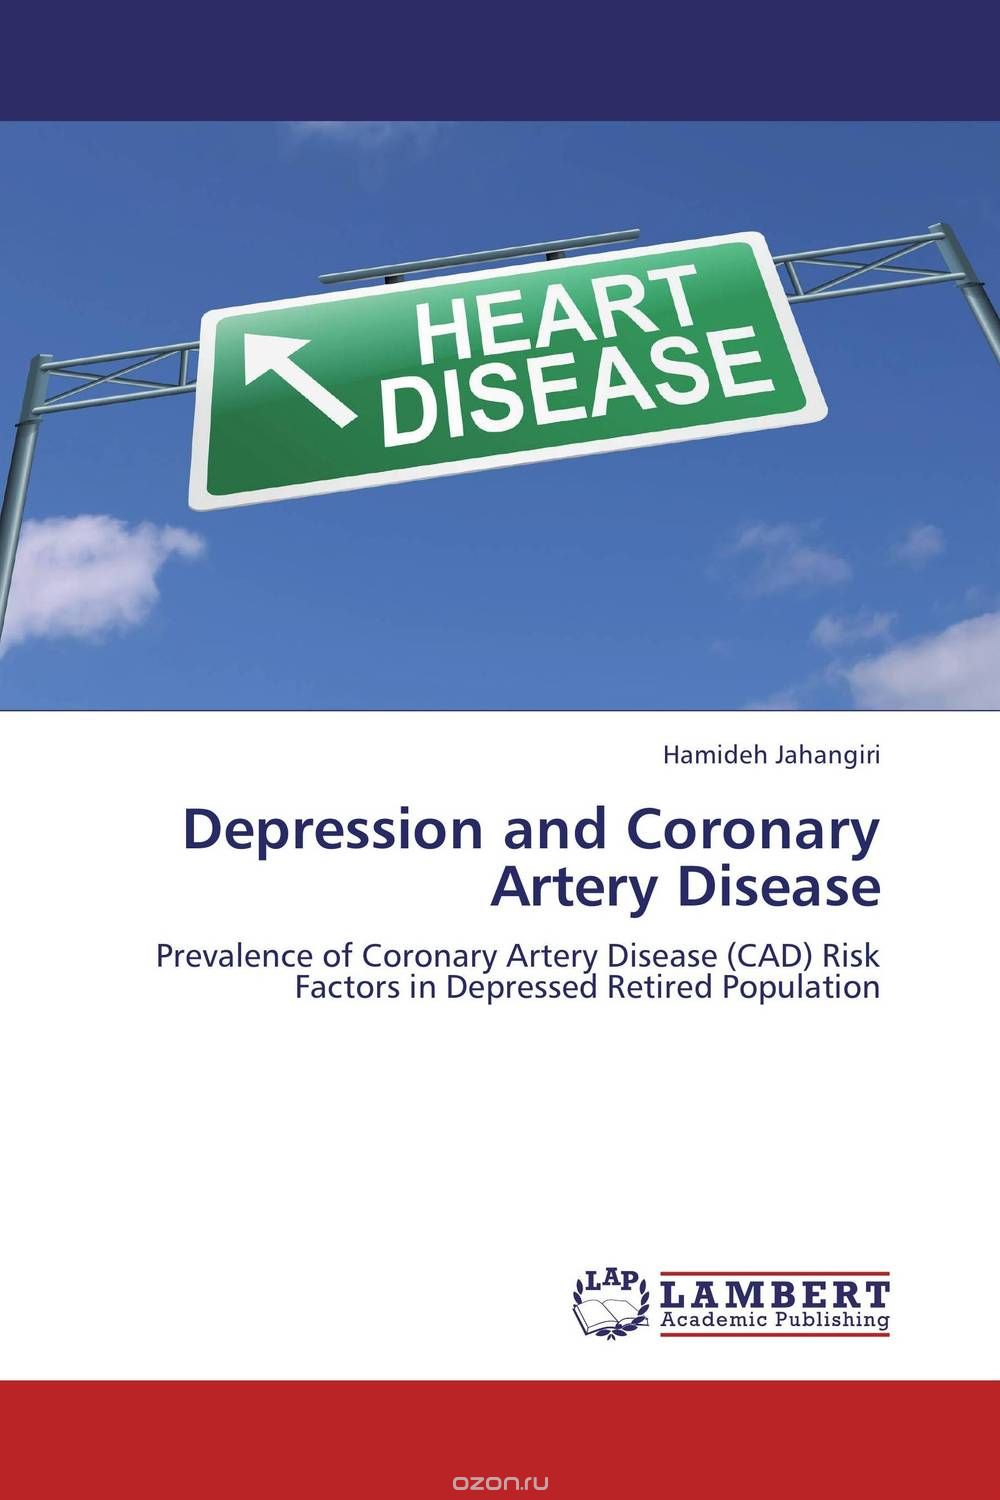 Скачать книгу "Depression and Coronary Artery Disease"